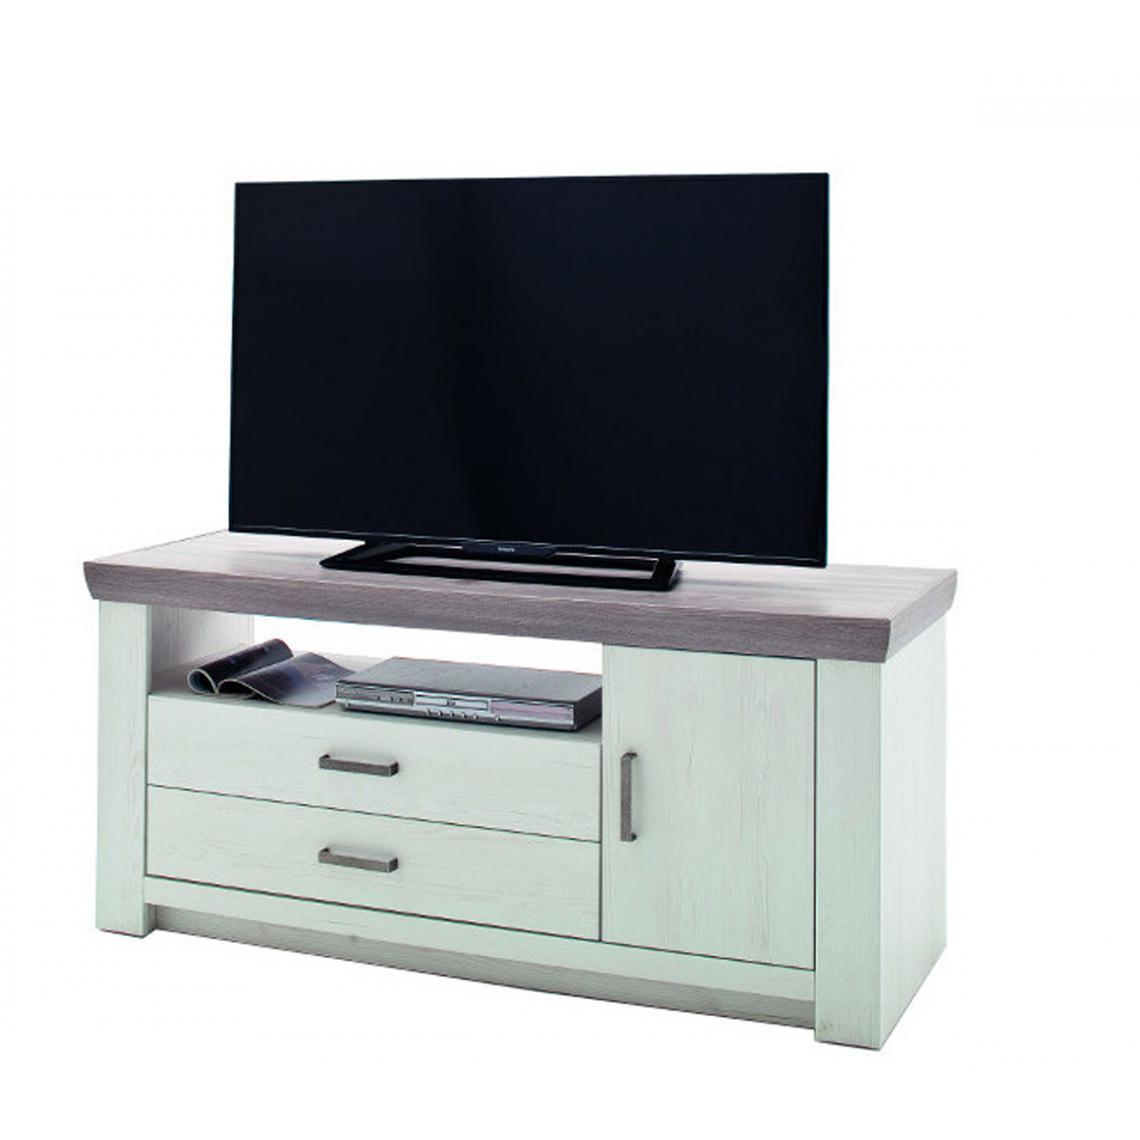 Pegane - Meuble TV en pin blanc et chêne Neslon - L.144 x H.67 x P.55 cm - Meubles TV, Hi-Fi